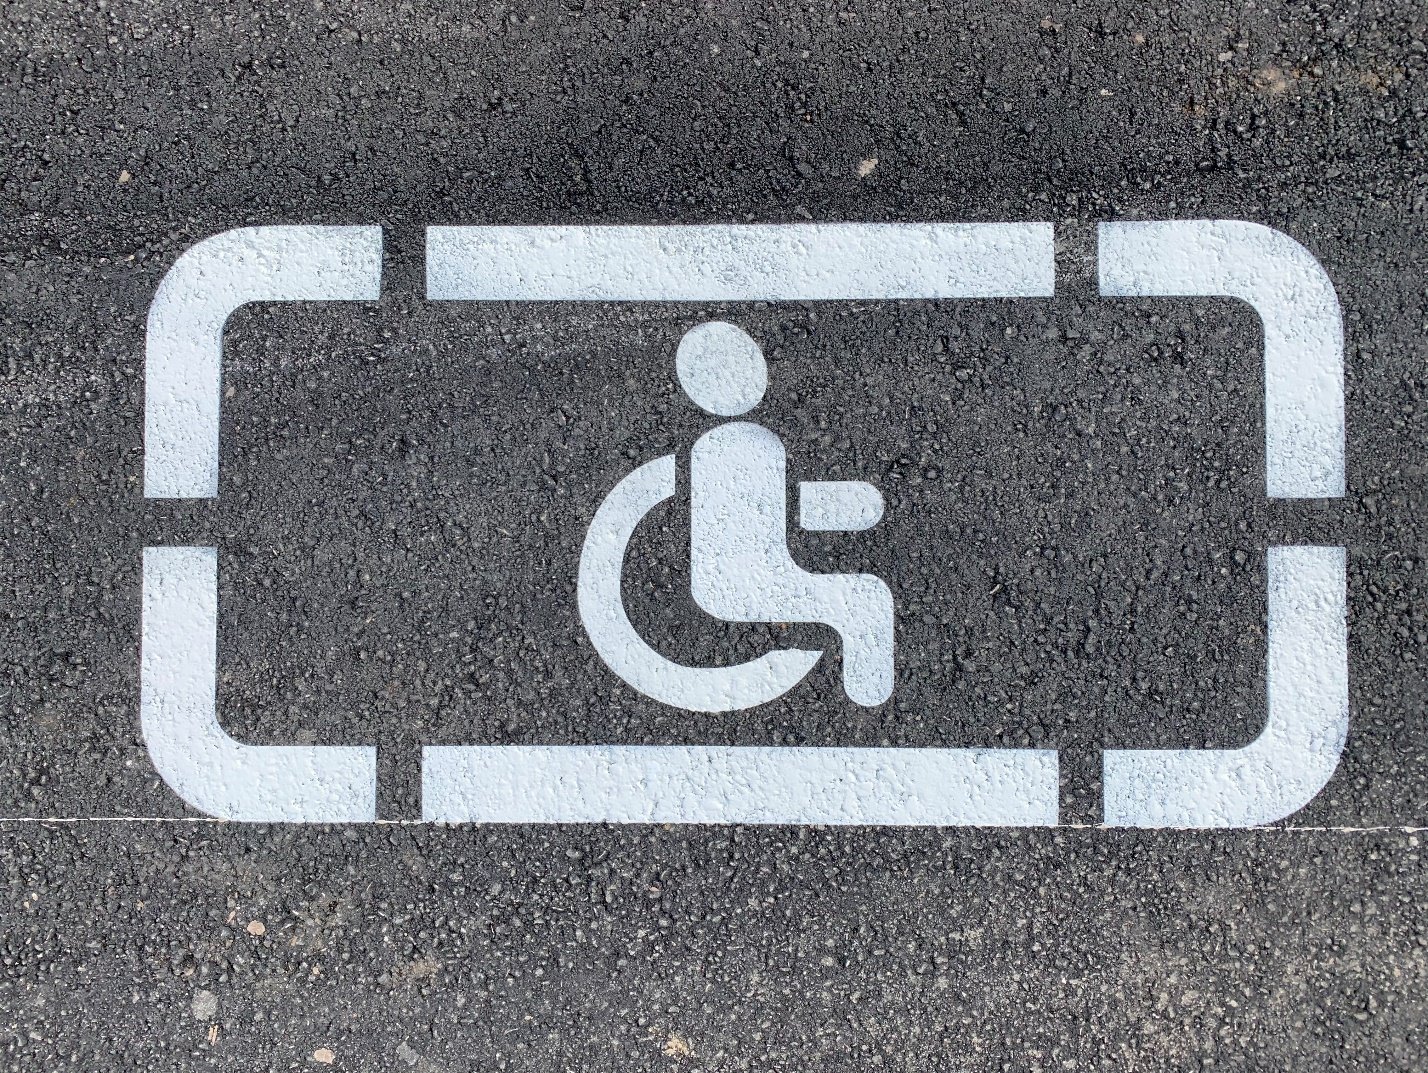 Каким инвалидам можно парковаться. Стоянка для инвалидов. Разметка стоянка для инвалидов. Дорожная разметка парковка для инвалидов. Разметка для инвалидов на парковке.